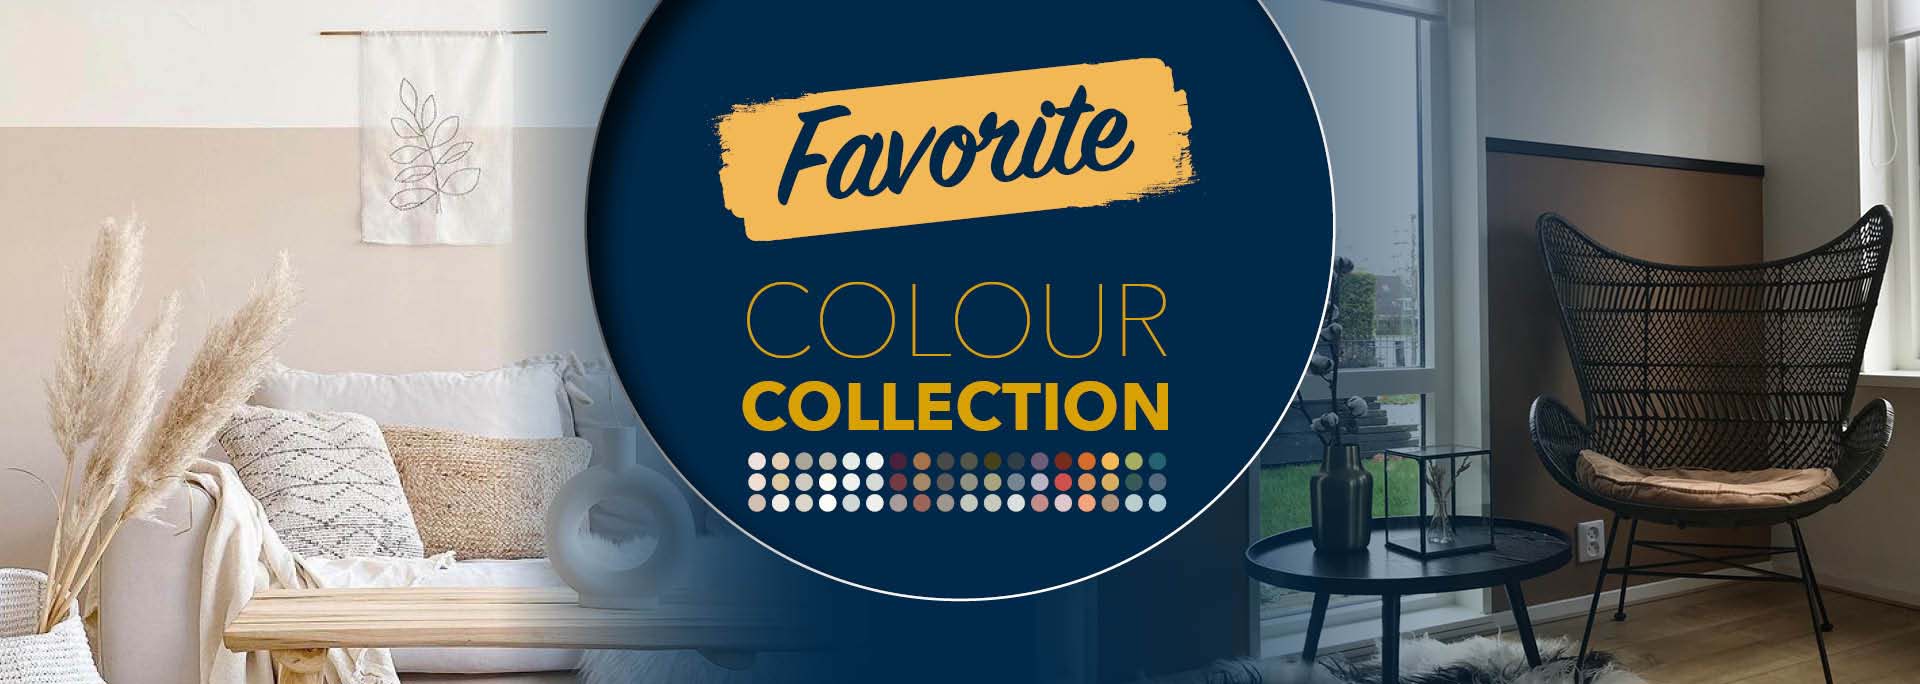 Favorite Colour Collection